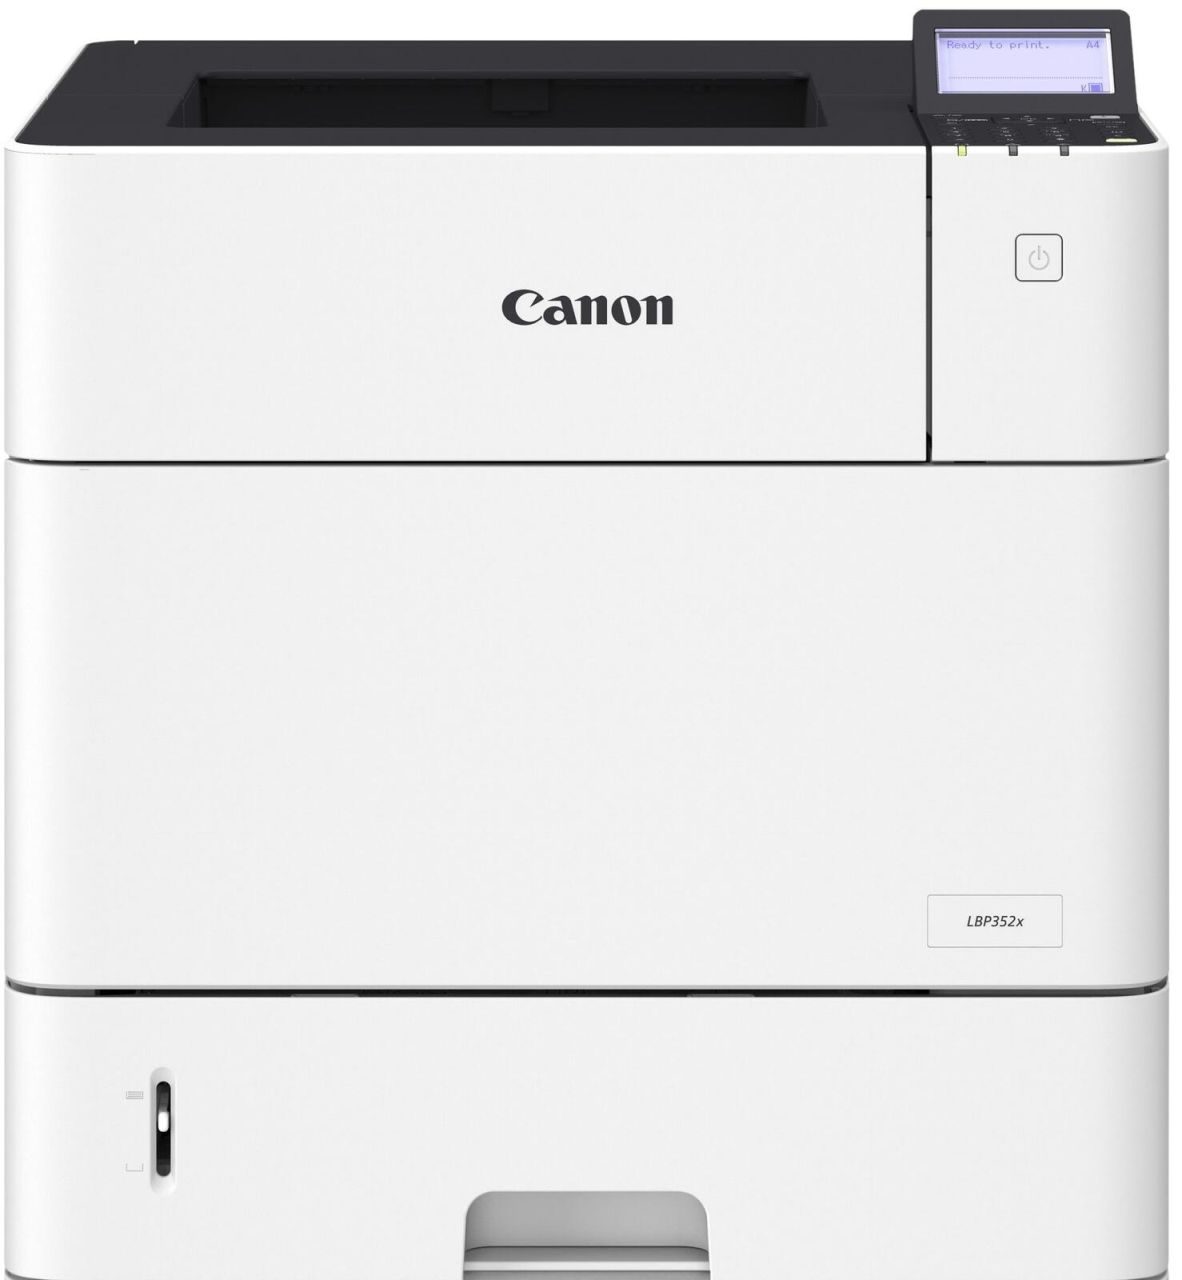 Canon i-SENSYS LBP352x Laserdrucker s/w